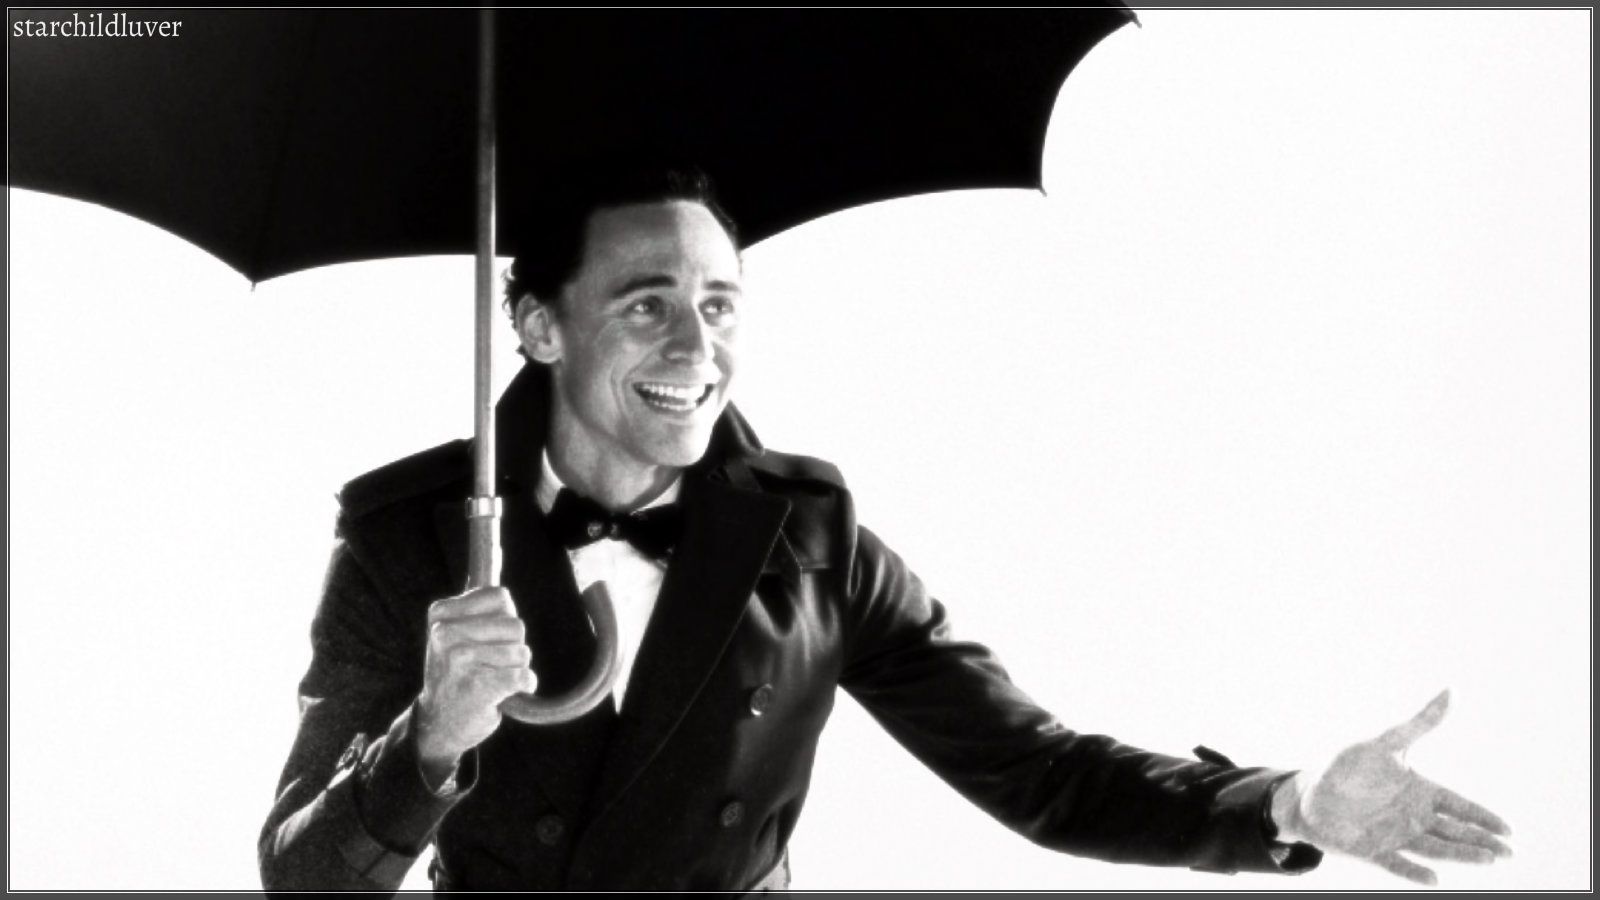 Tom Hiddleston - Tom Hiddleston Wallpaper 36642263 - Fanpop